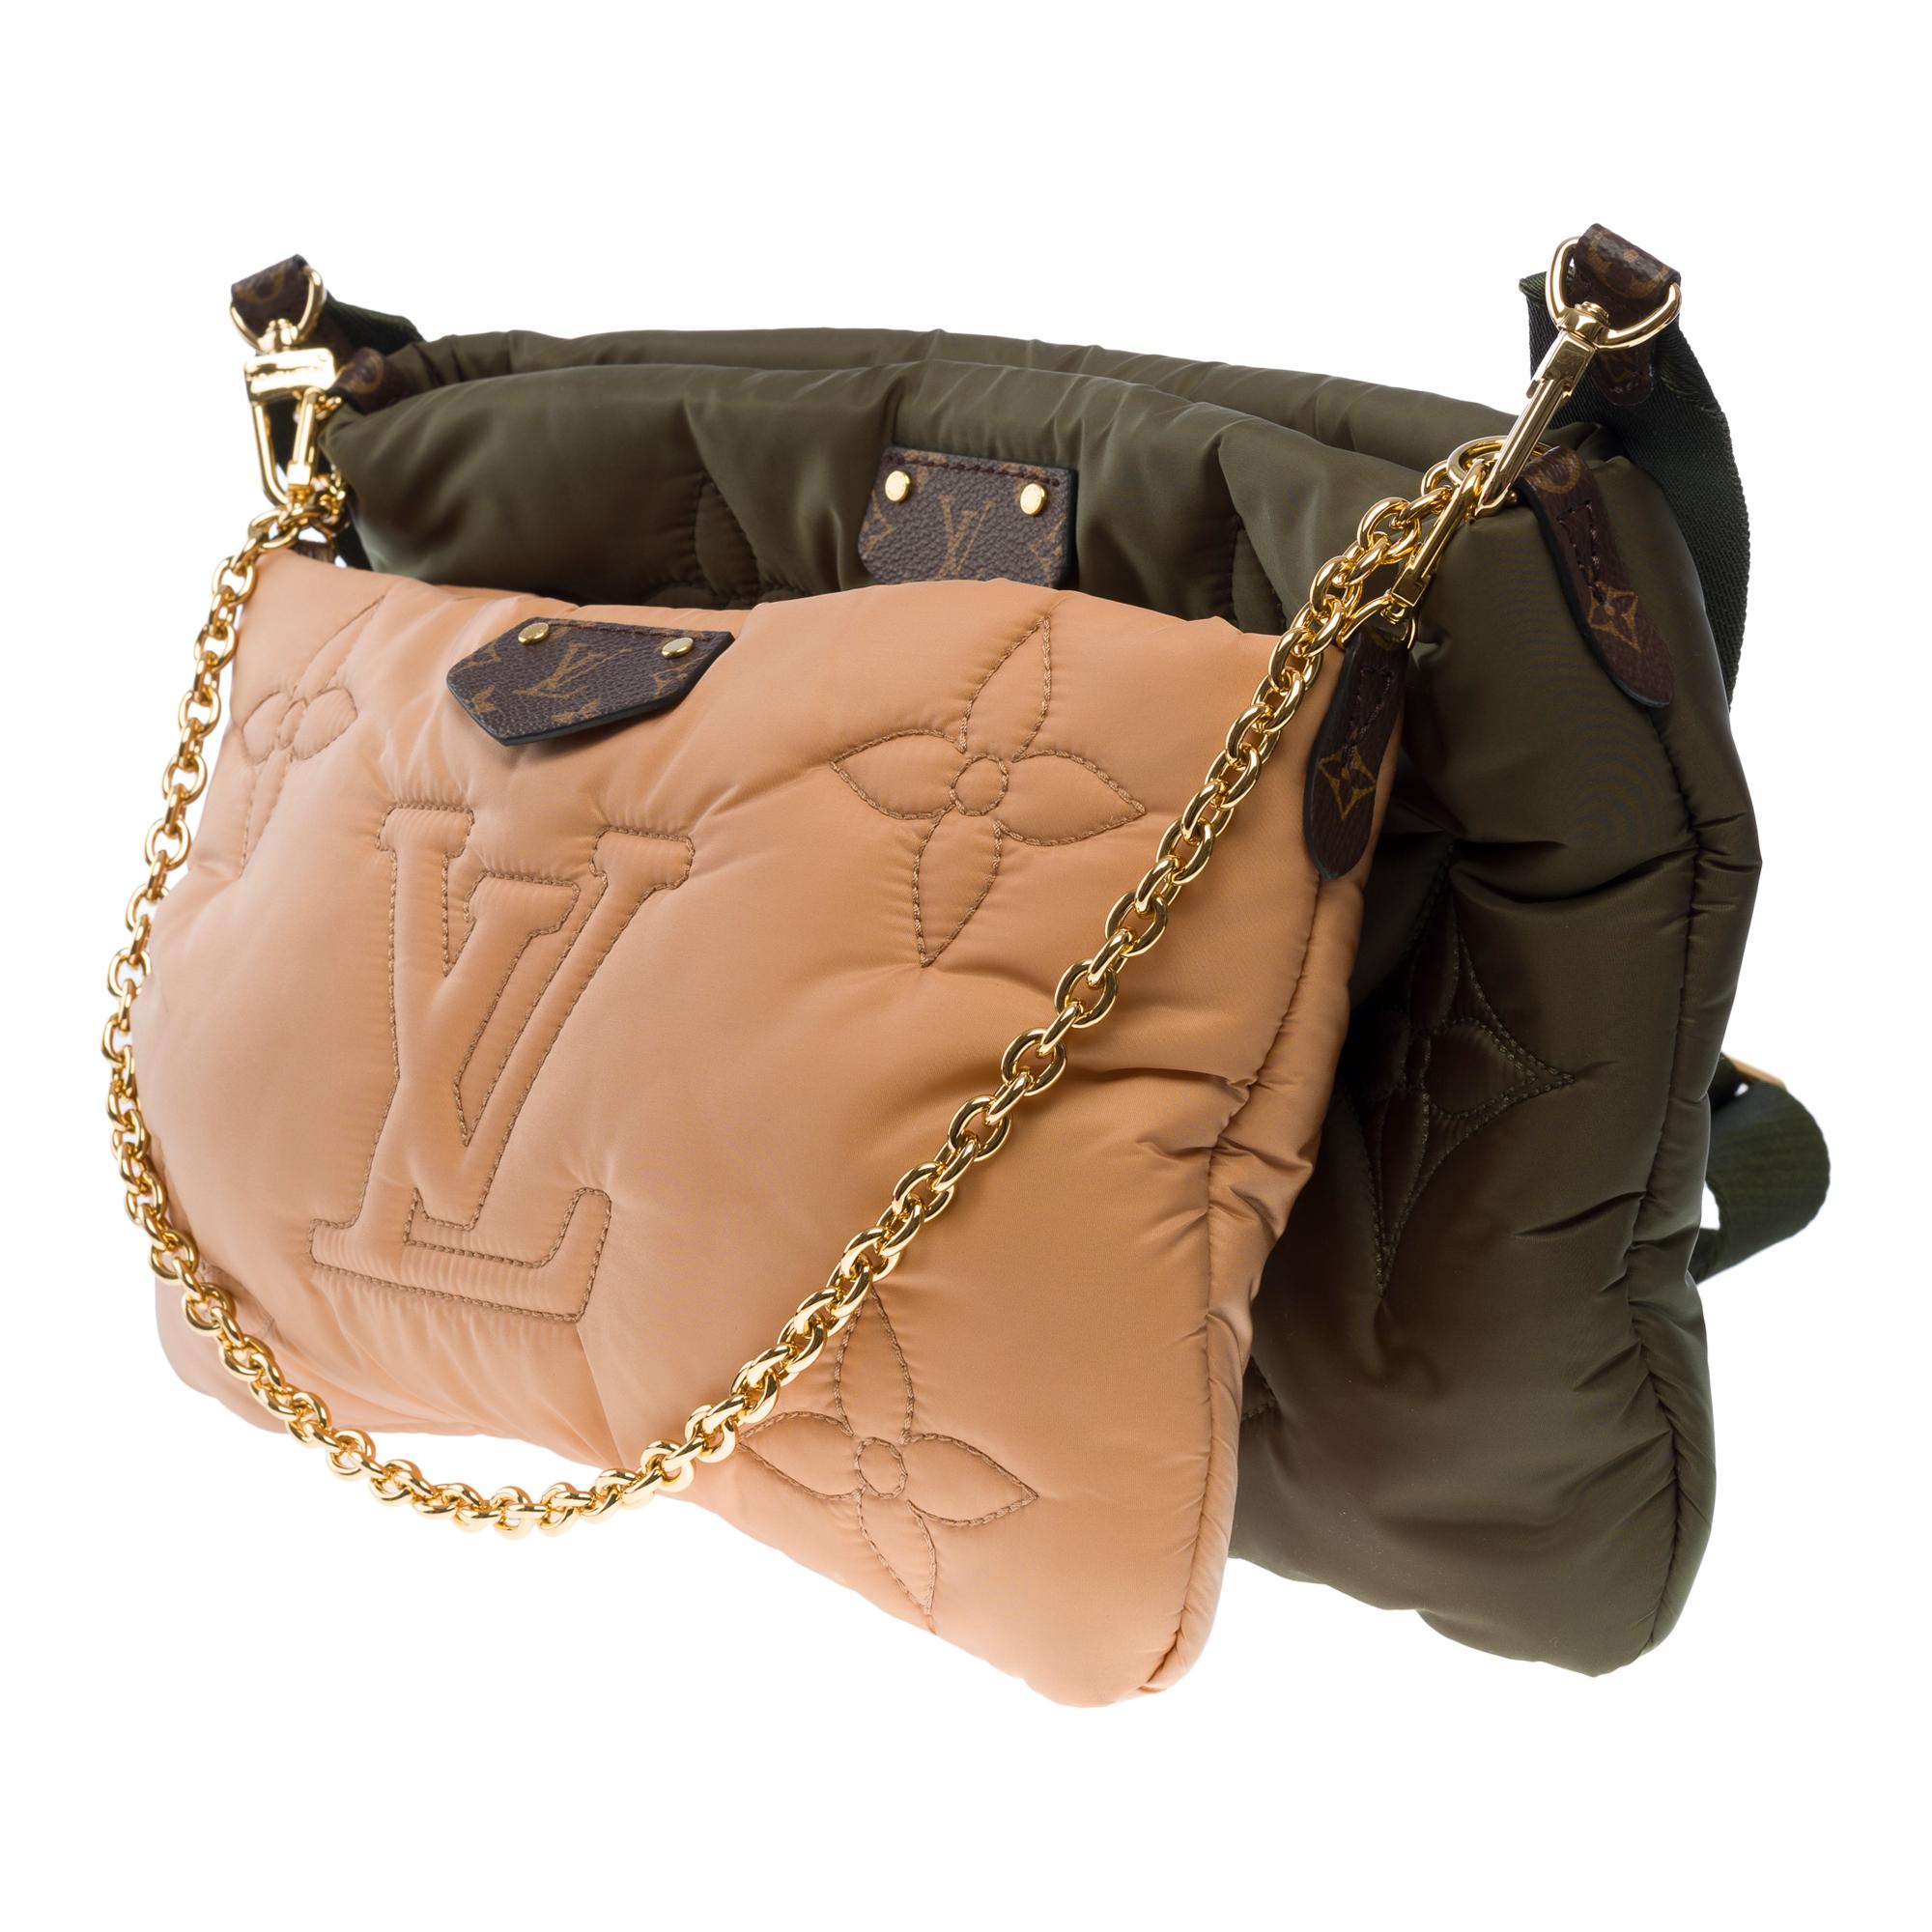 New Louis Vuitton Pillow Maxi Pochette shoulder bag in khaki/Beige nylon, GHW For Sale 1